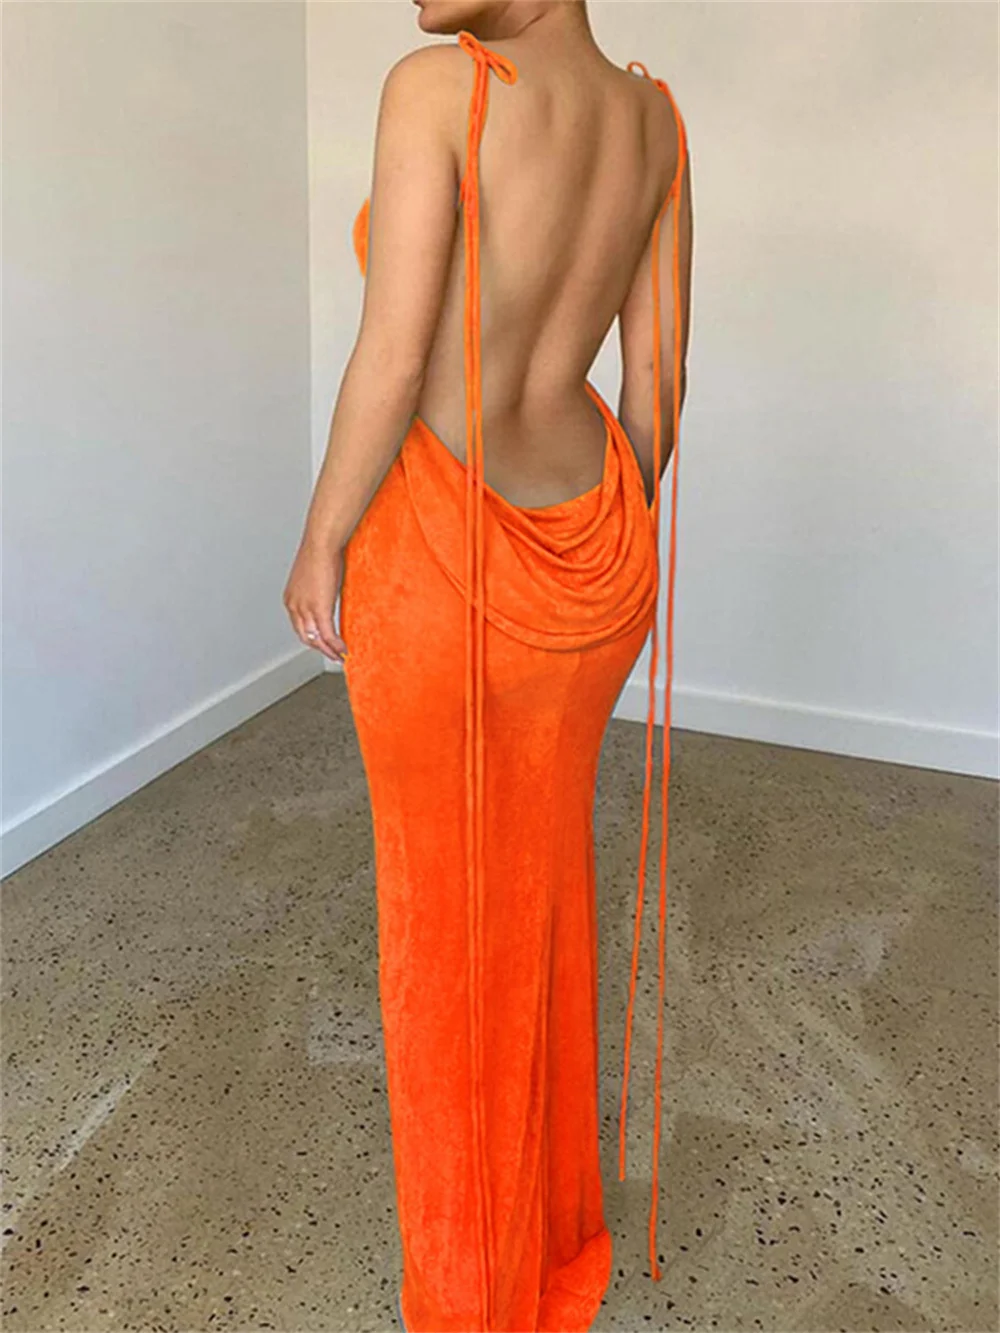 Backless Maxi Dress  Orange Spaghetti Strap Slim Dress For Women Long Club Party Beach Dress Summer Blue Outfits 2022 New